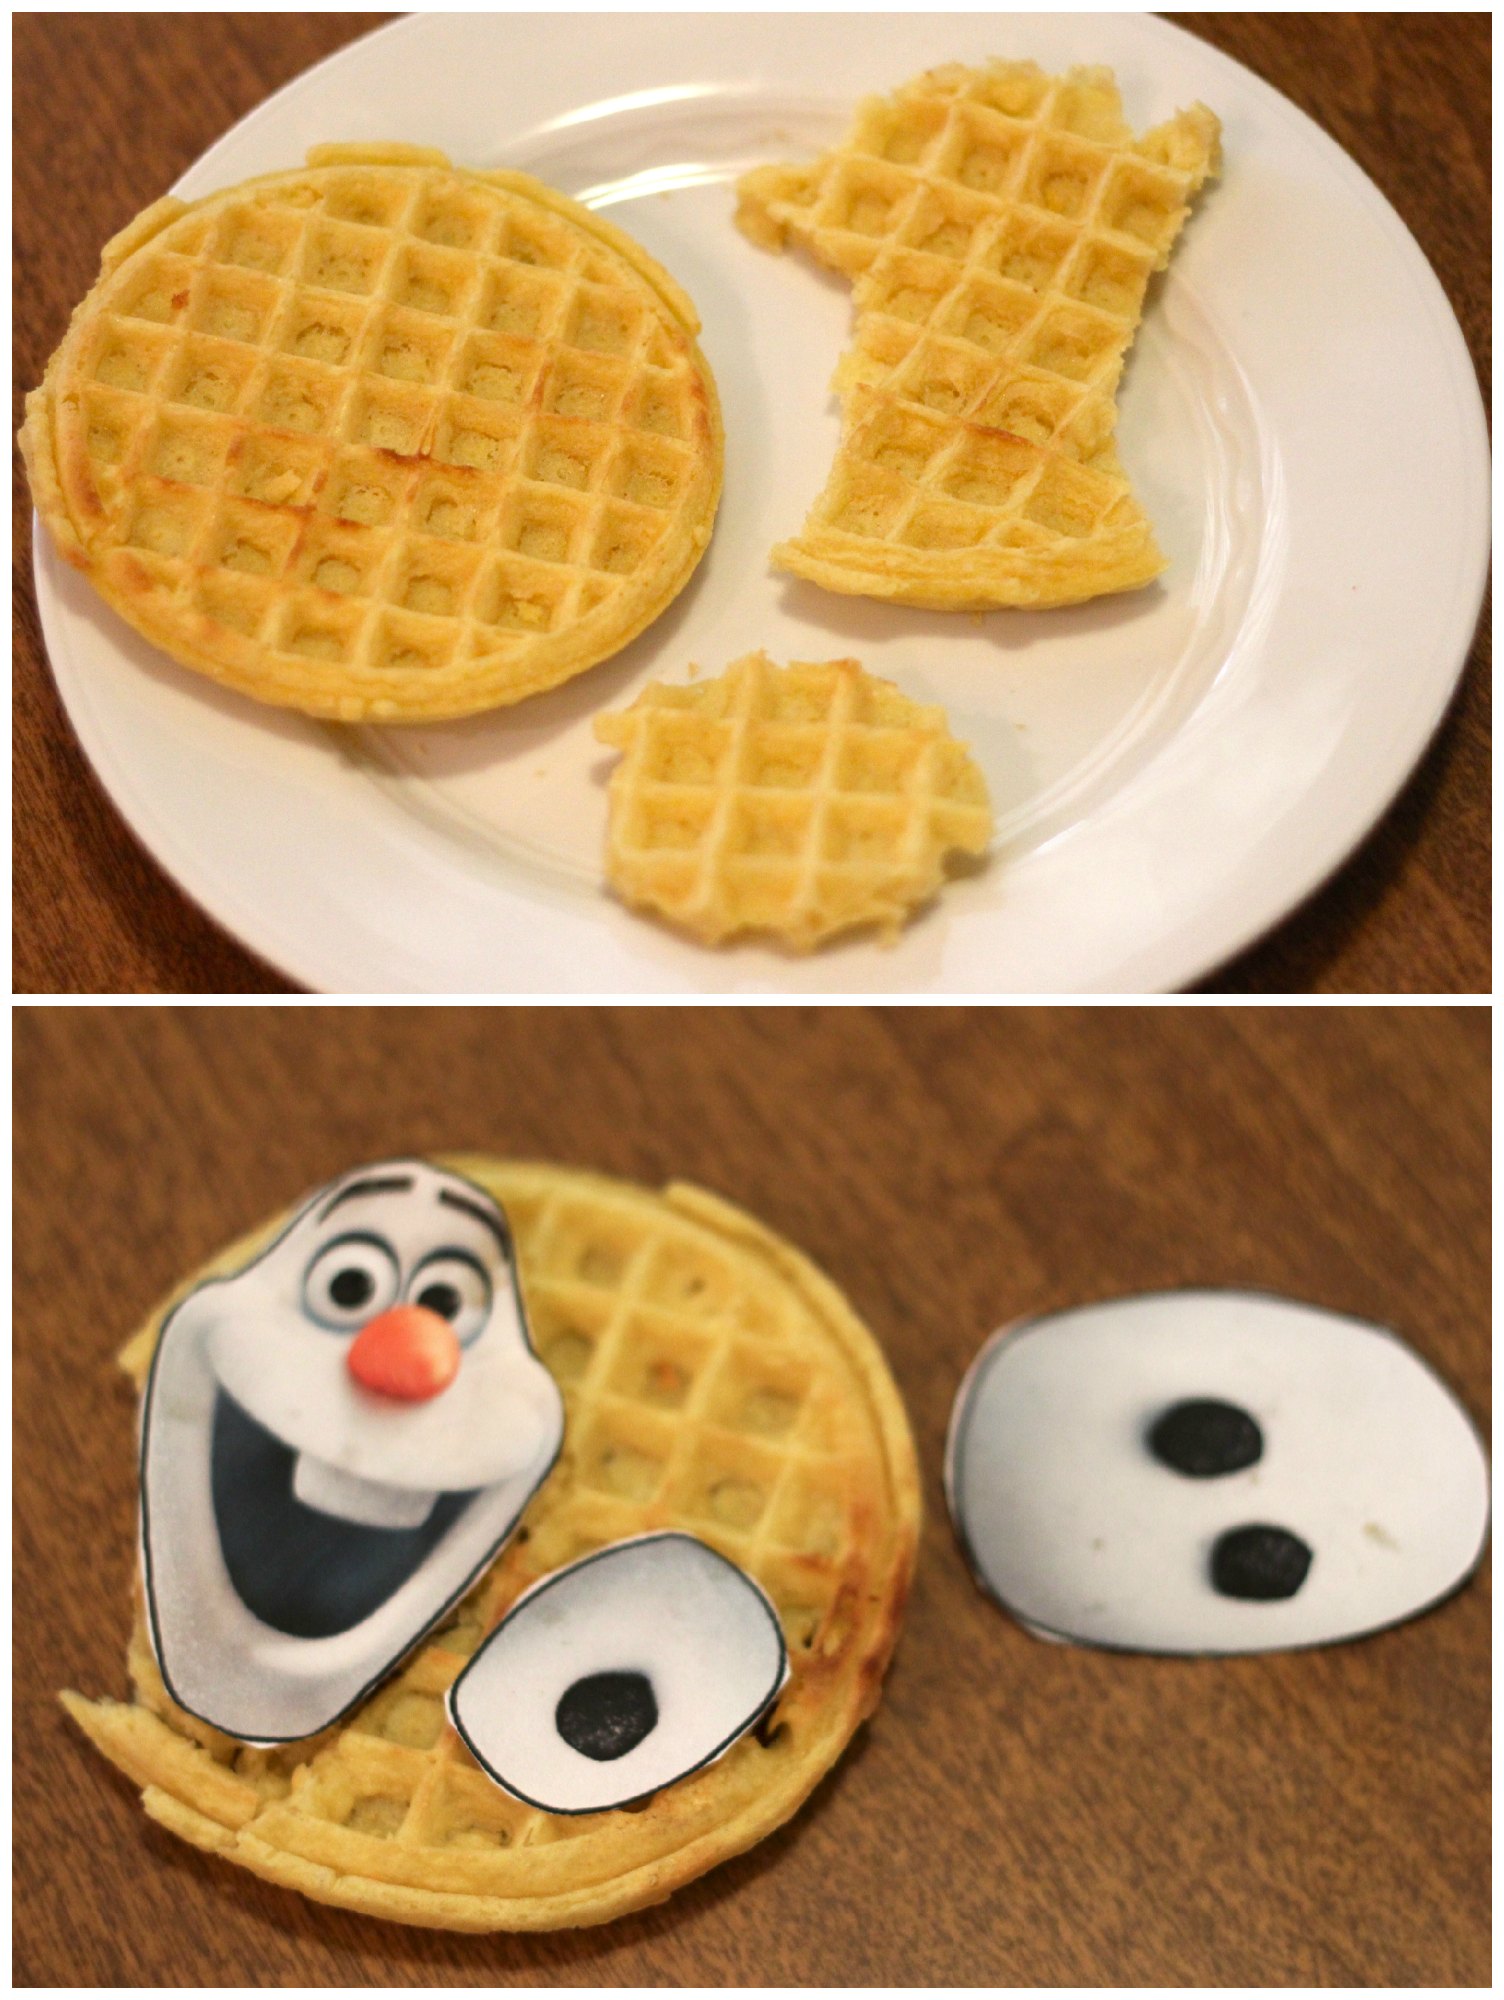 Making Olaf & Sven Waffles